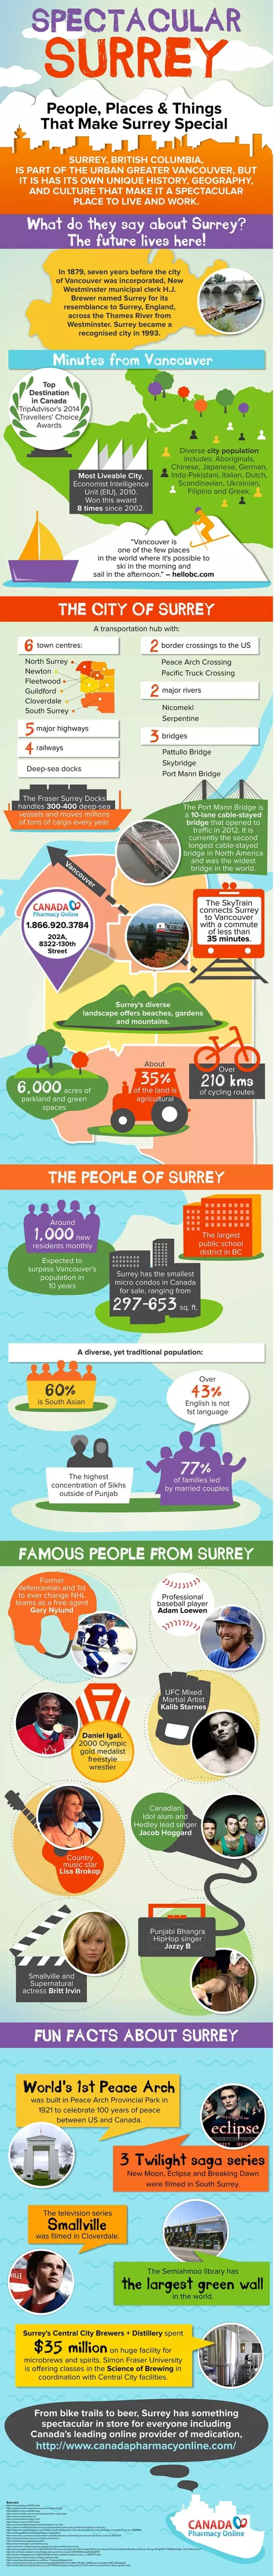 Spectacular Surrey infographic